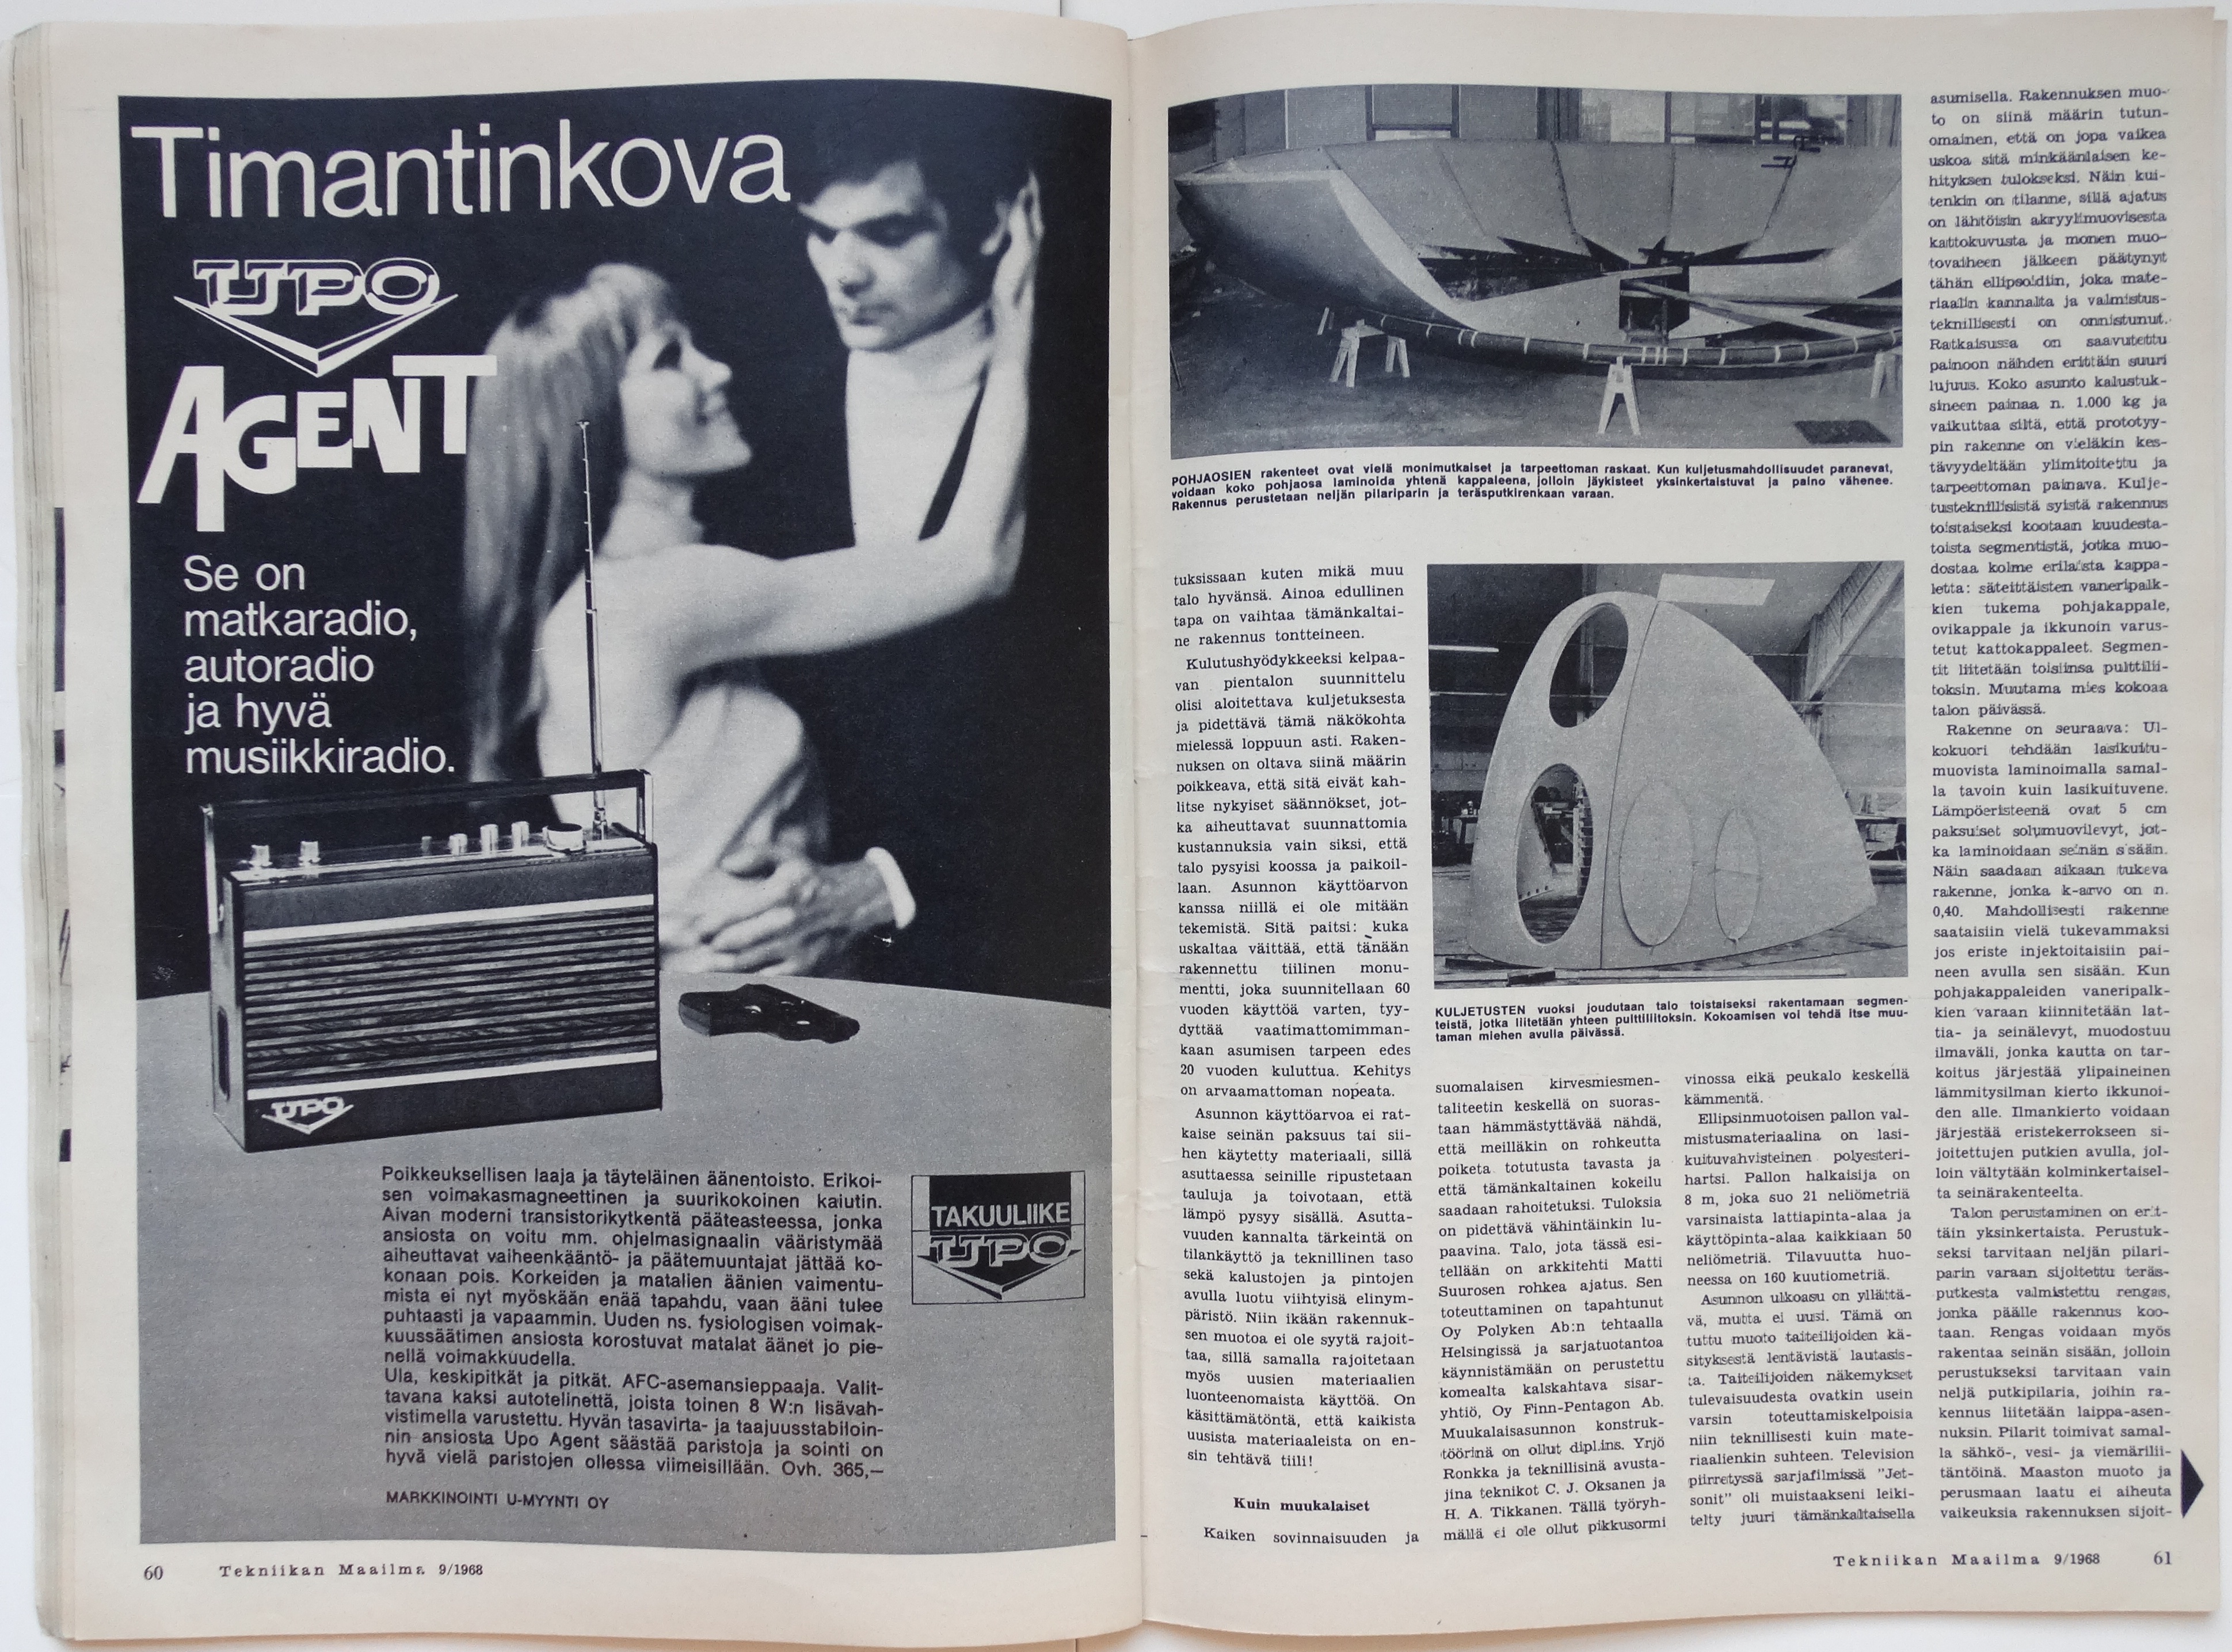 Tekniikan Maailma September 1968 | Pages 60-61